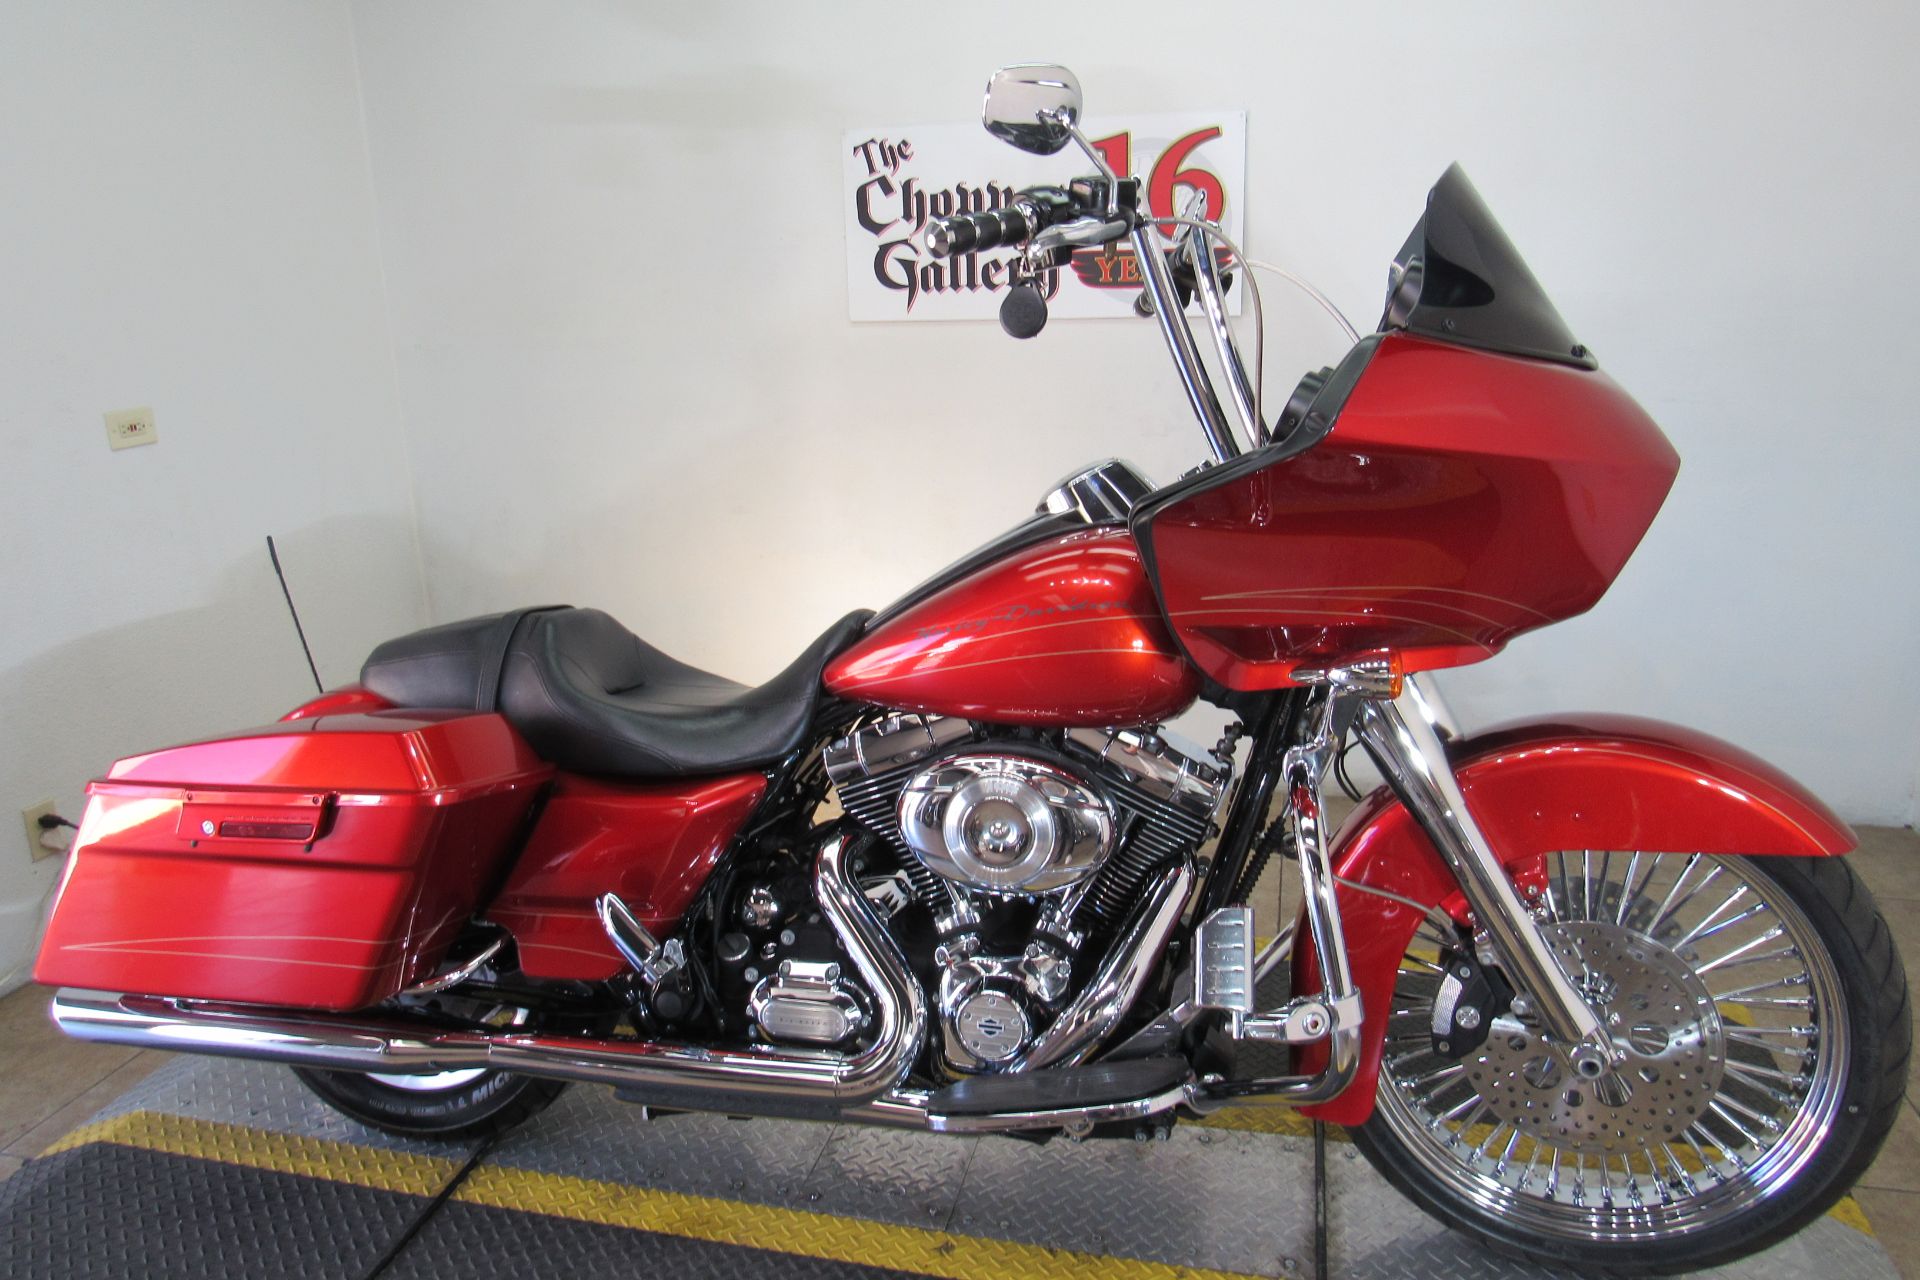 2013 Harley-Davidson Road Glide® Custom in Temecula, California - Photo 5